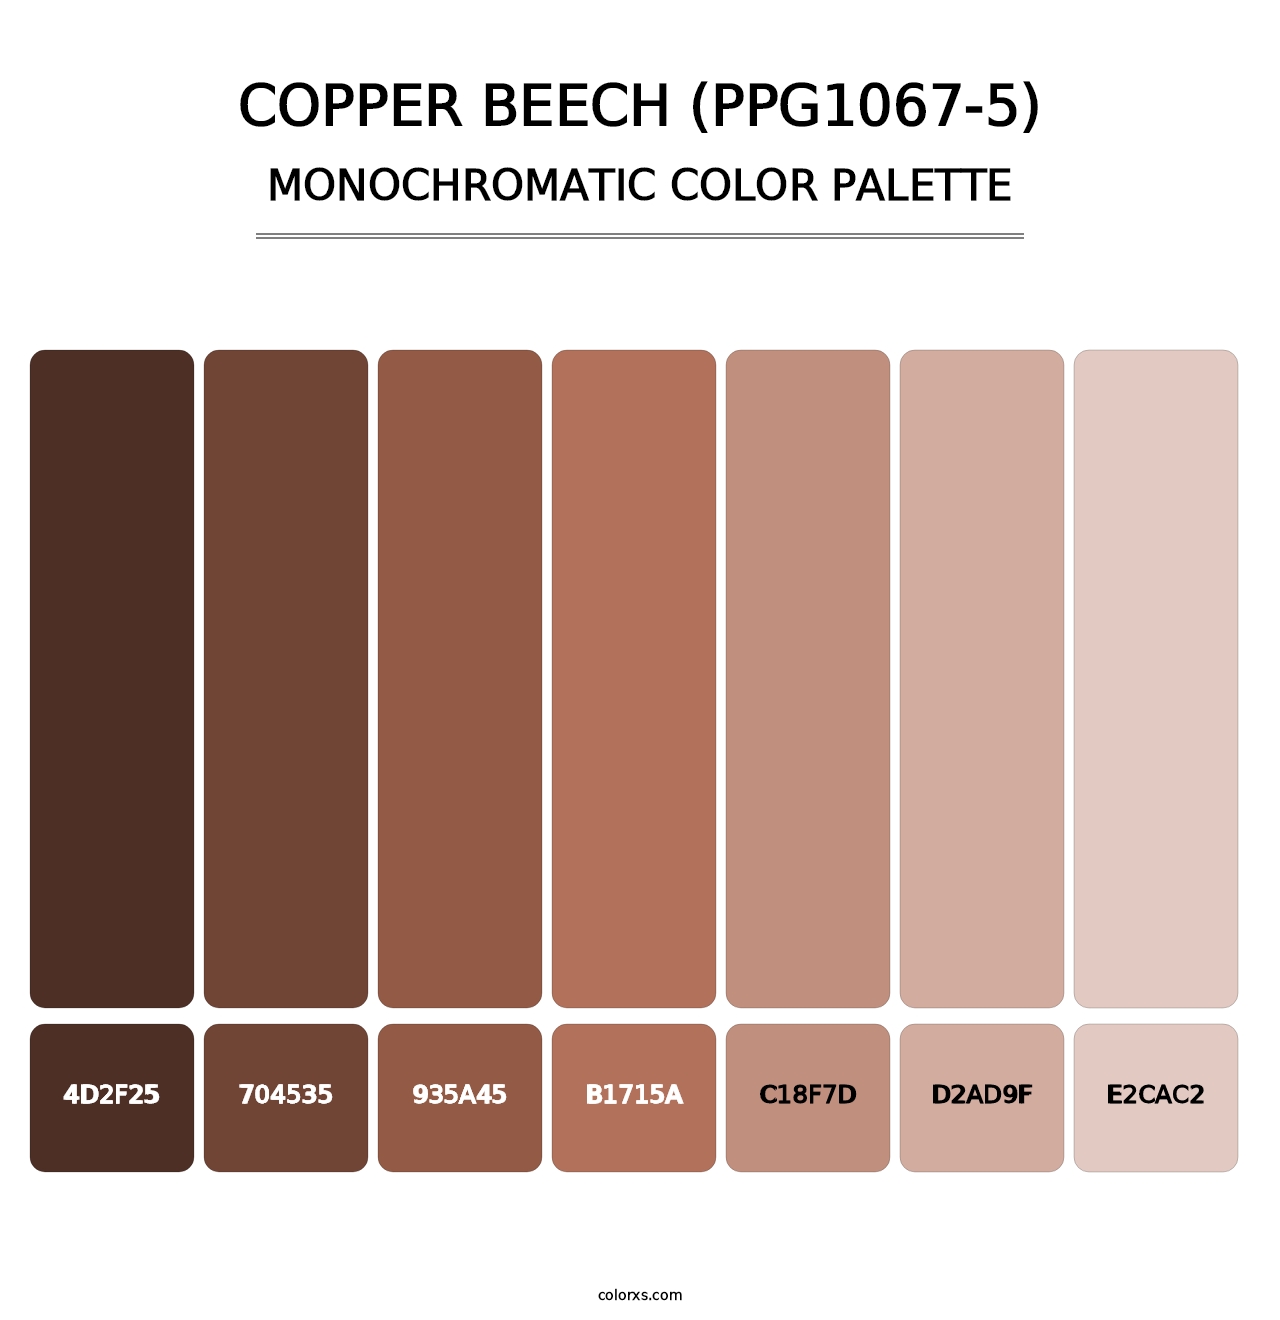 Copper Beech (PPG1067-5) - Monochromatic Color Palette